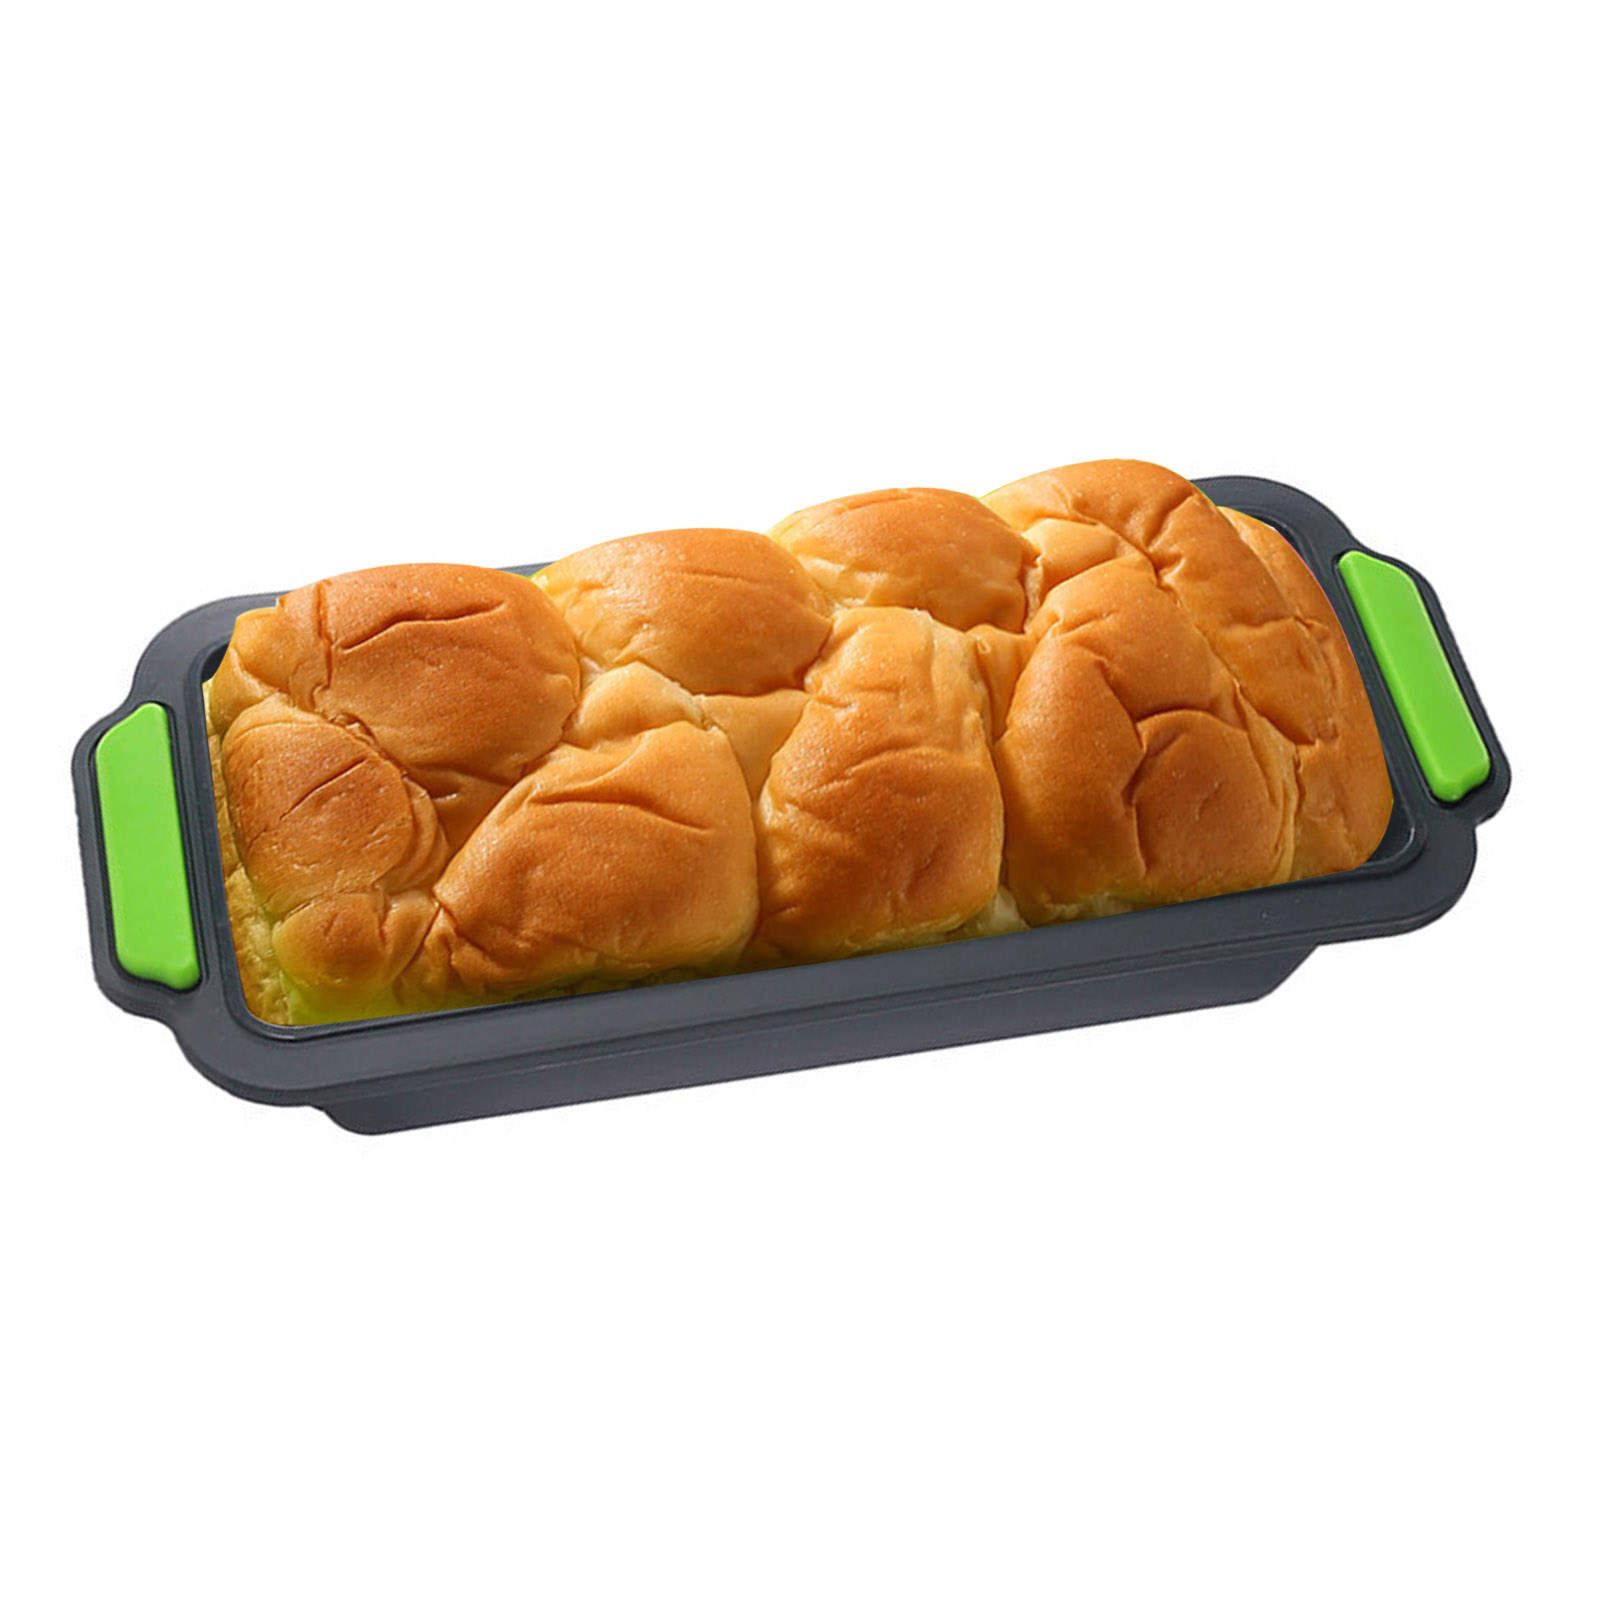 Brood Pannen Voor Bakken Brood Pannen Voor Bakken Brood Brood En Brood Pan Loaf Siliconen Cakevorm Anti-aanbak Non-Slip Hand